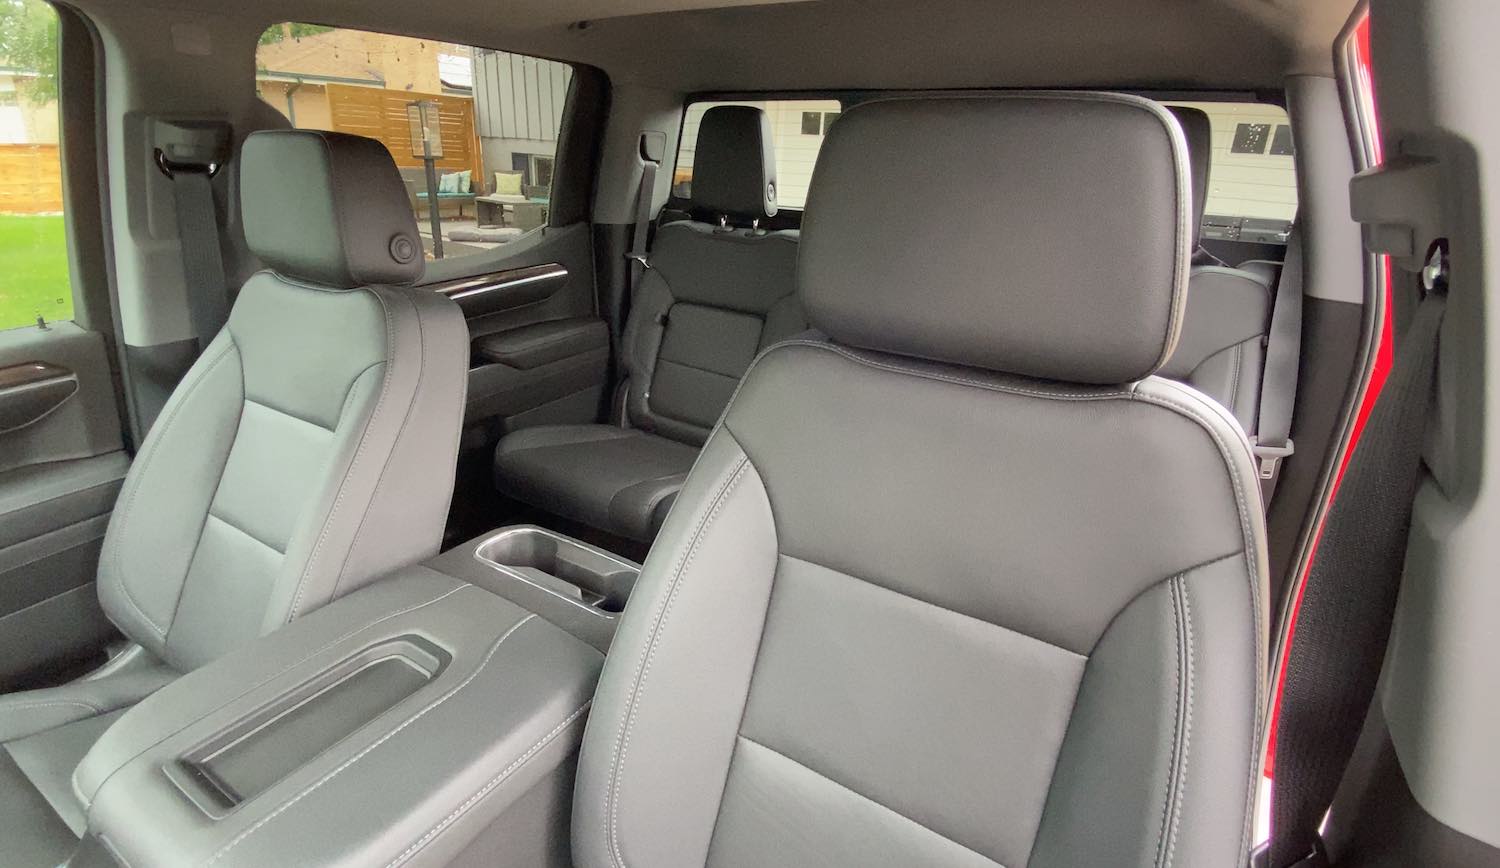 luxurious leather interior of the 2022 Chevy Silverado